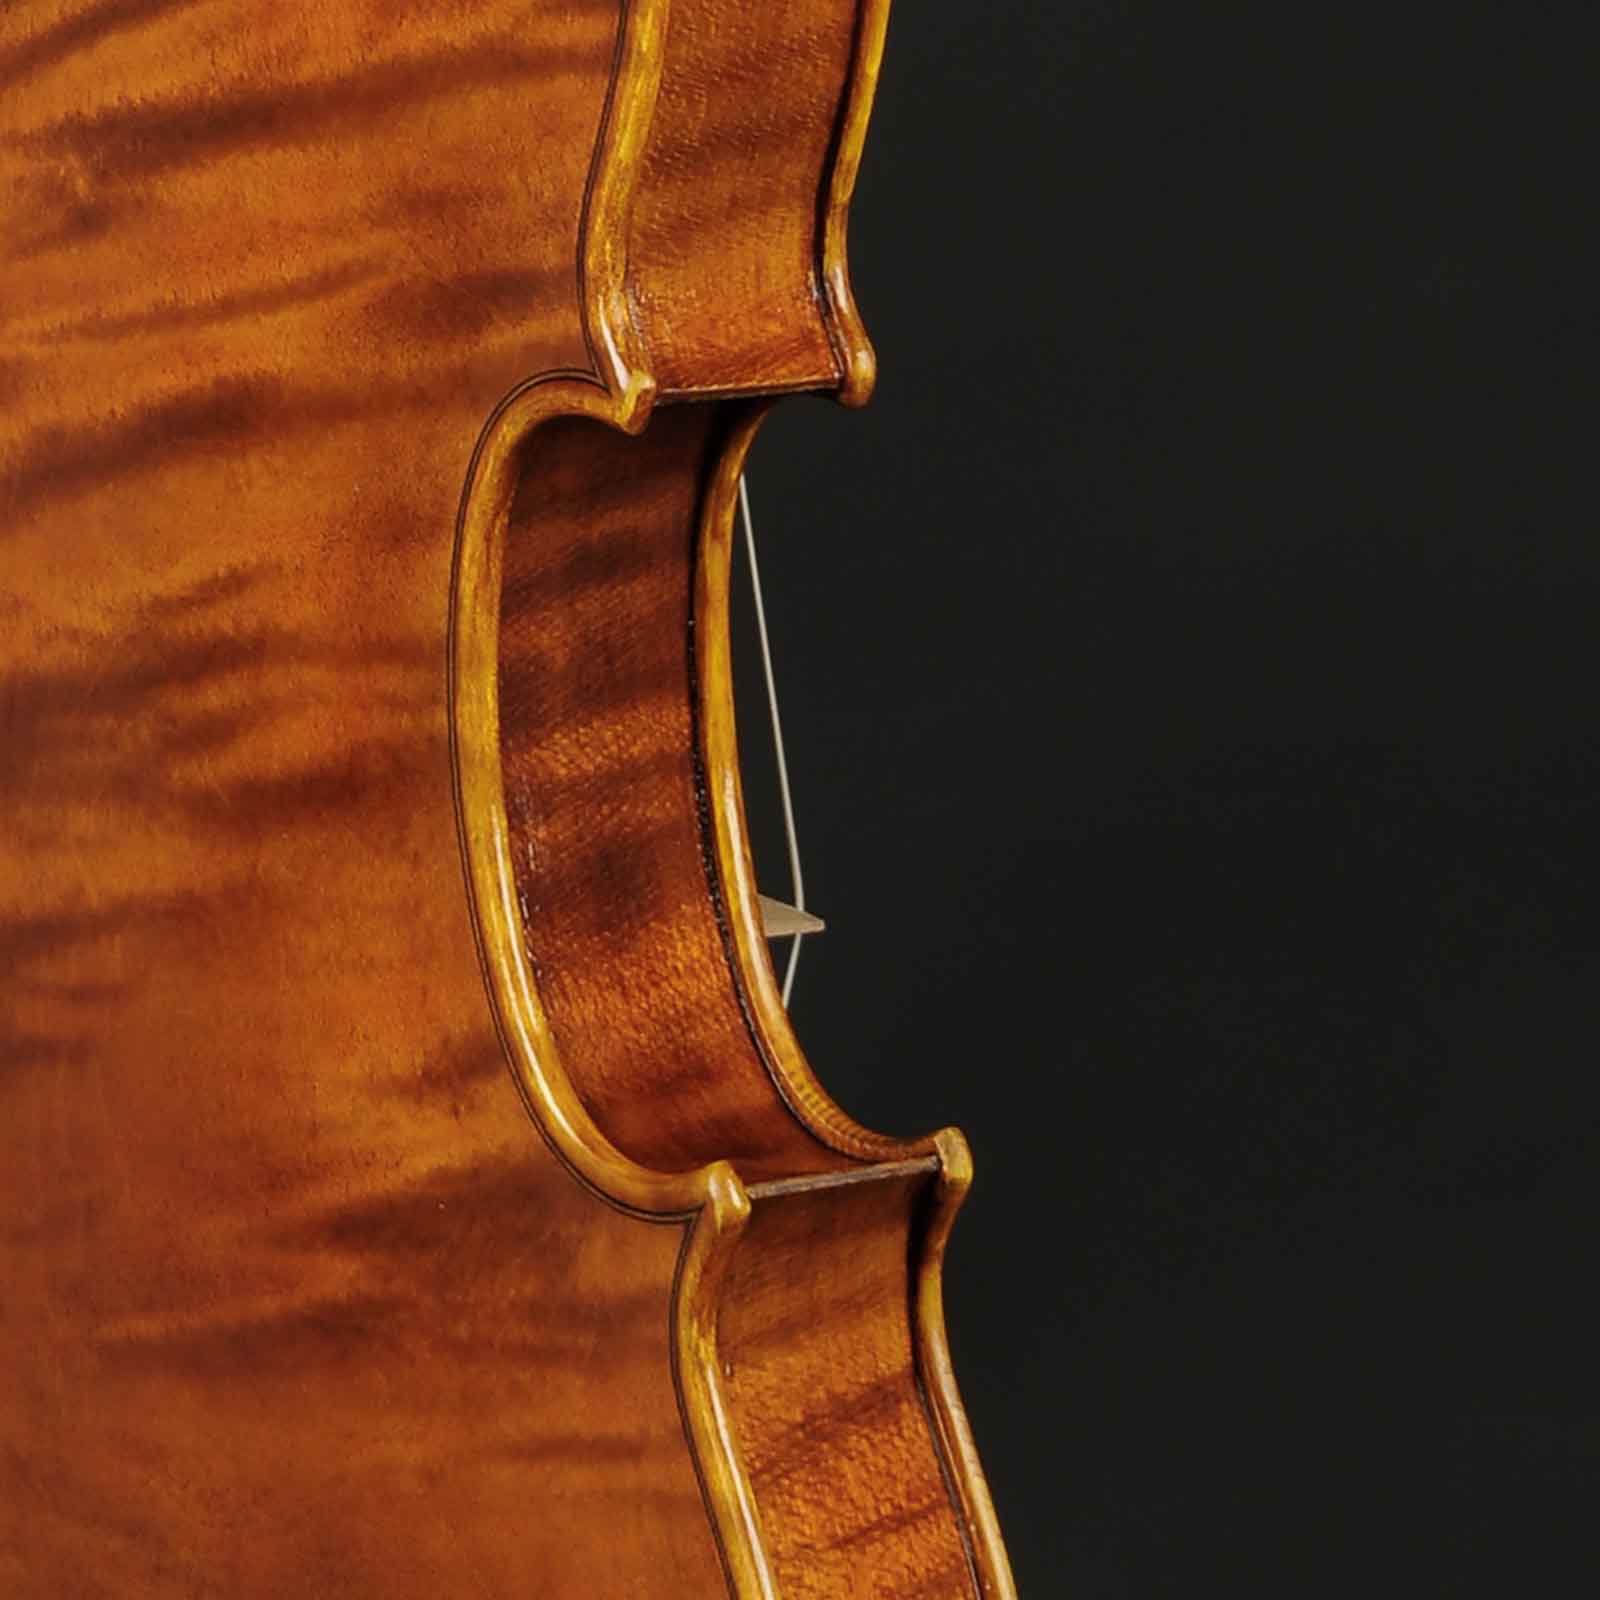 Antonio Stradivari Cremona 1720 “Santa Maria“ - Image 5